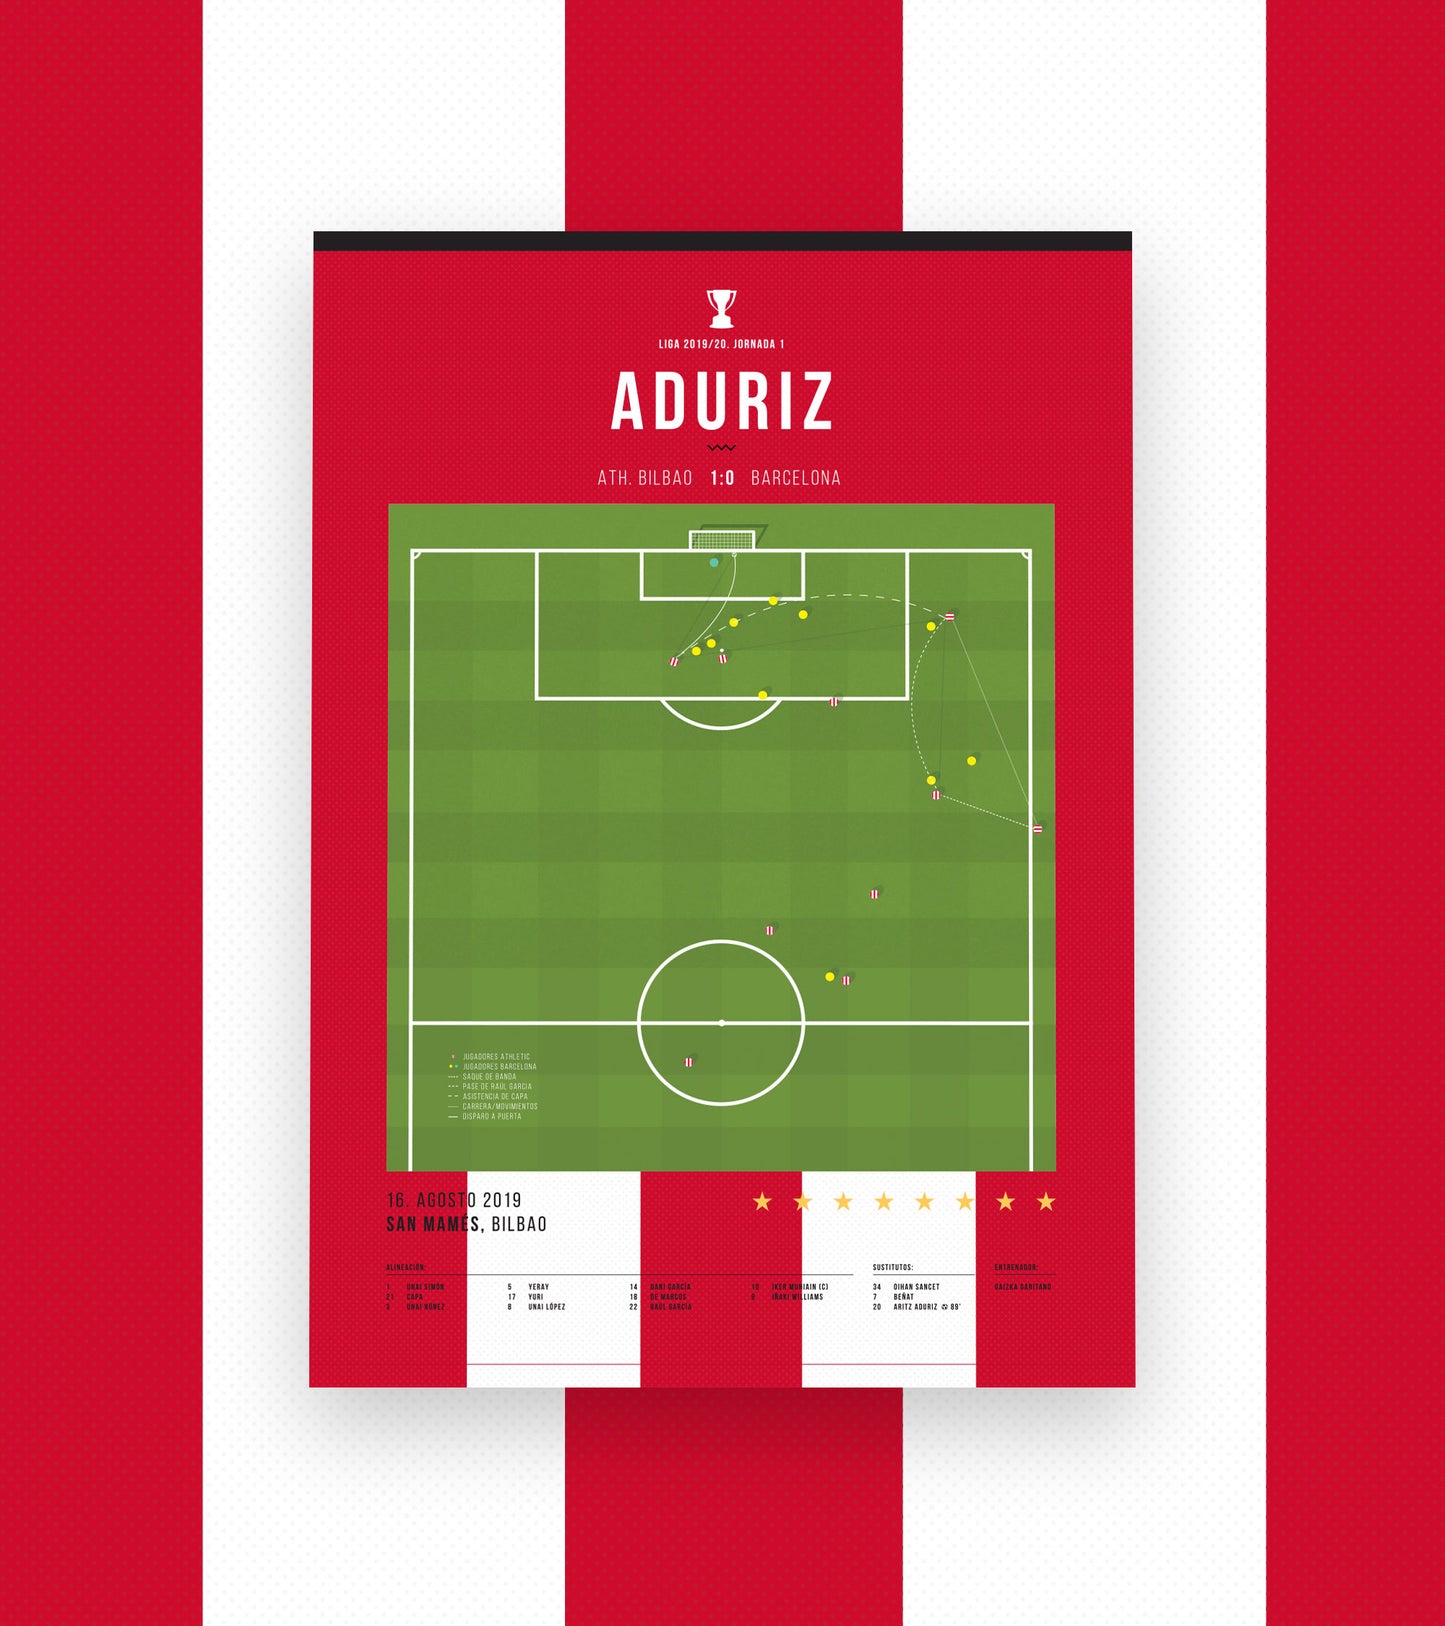 Aduriz's 'golazo' against Barcelona